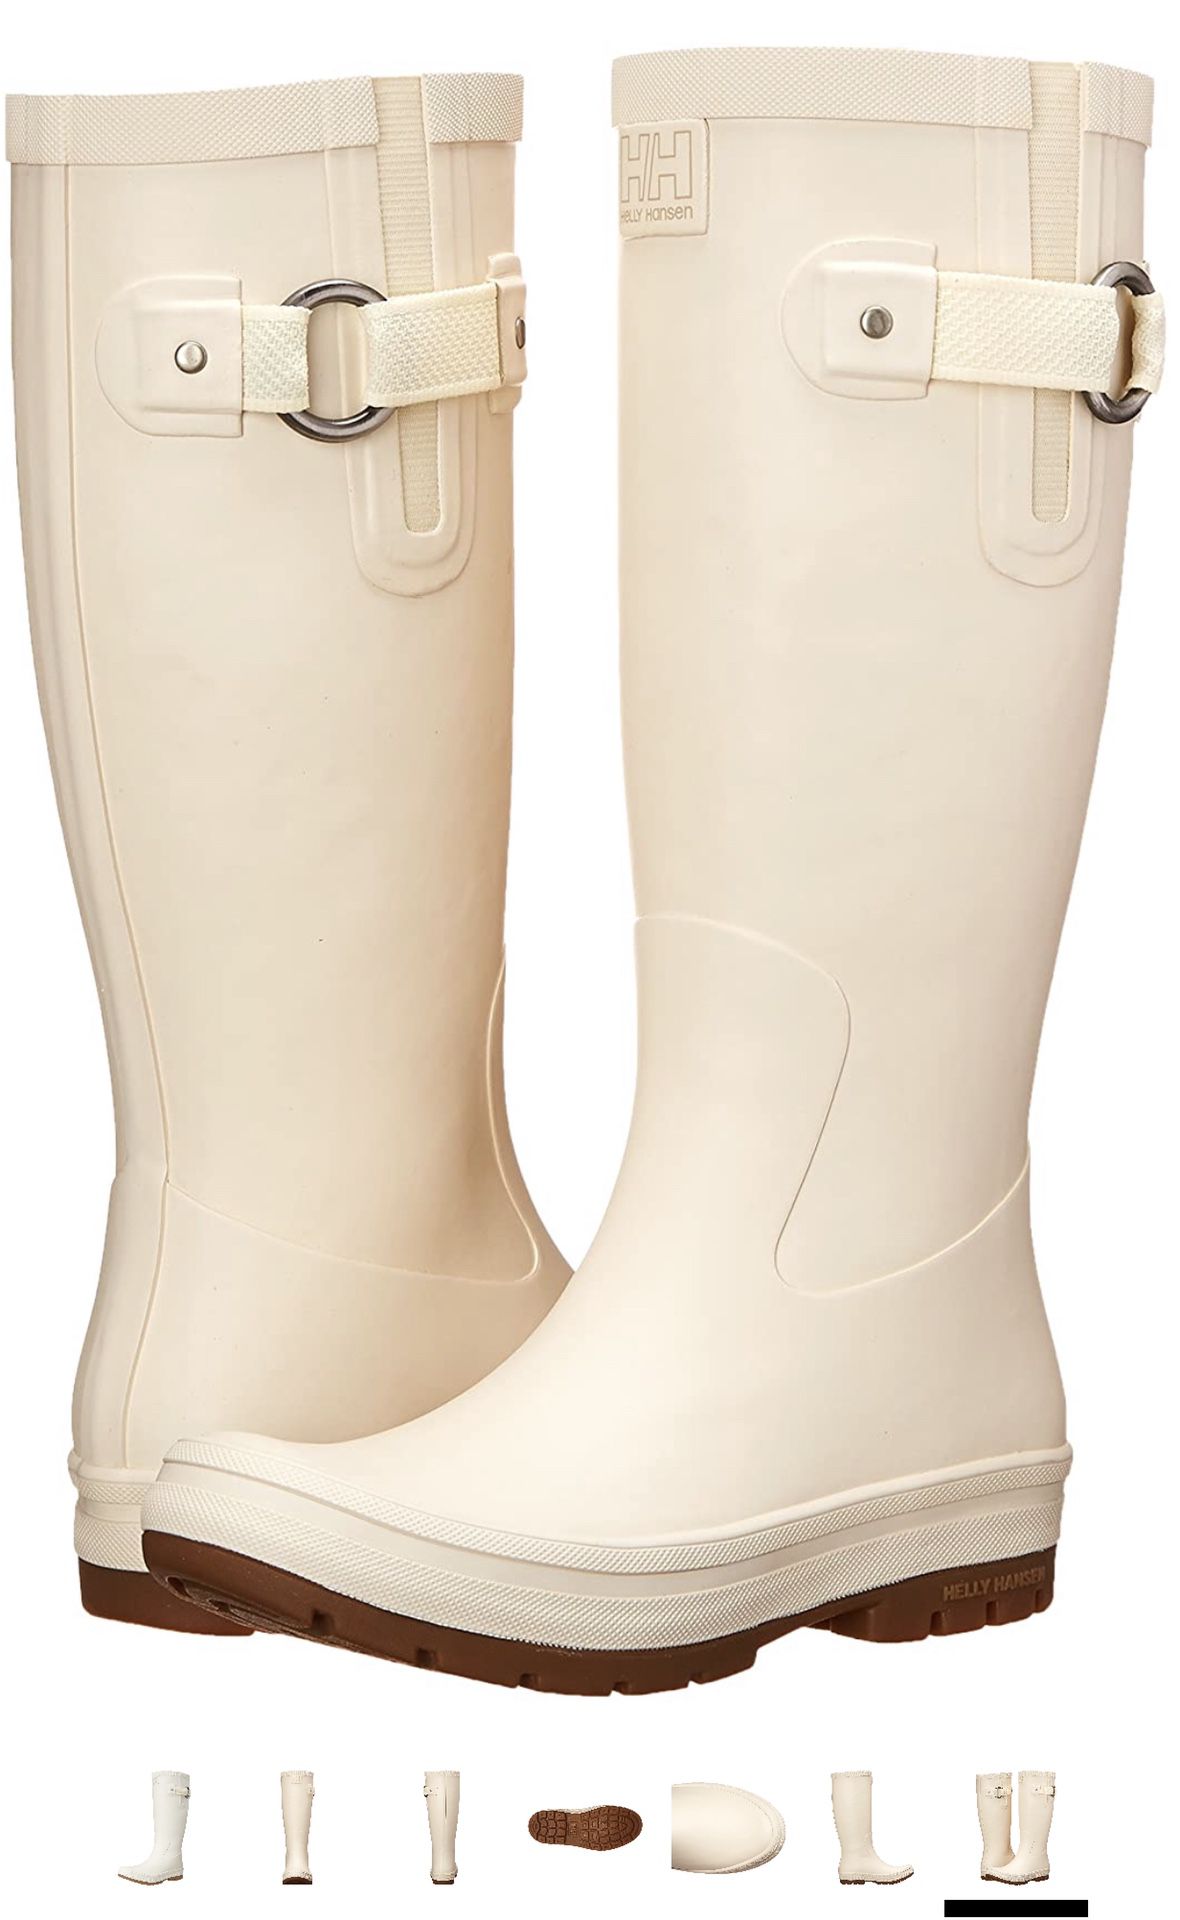 Brand New Helly Hansen Rain boots